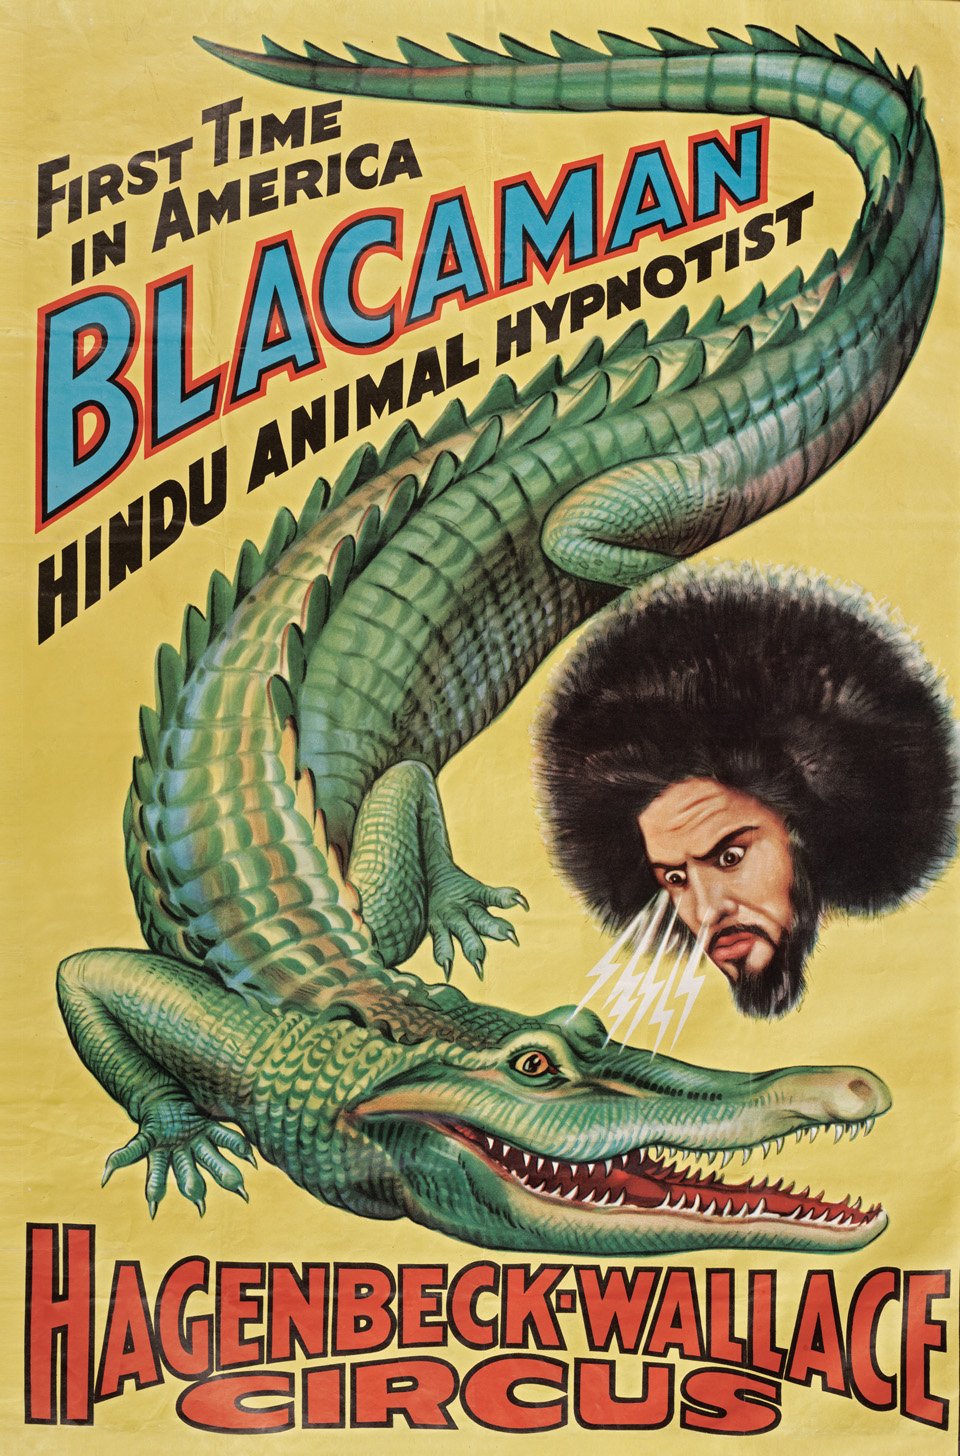 Blacaman, “Hindu Animal Hypnotist,” Hagenbeck-Wallace circus poster, 1938. Copyright: The John & Mable Ringling Museum of Art, Tibbals Digital Collection